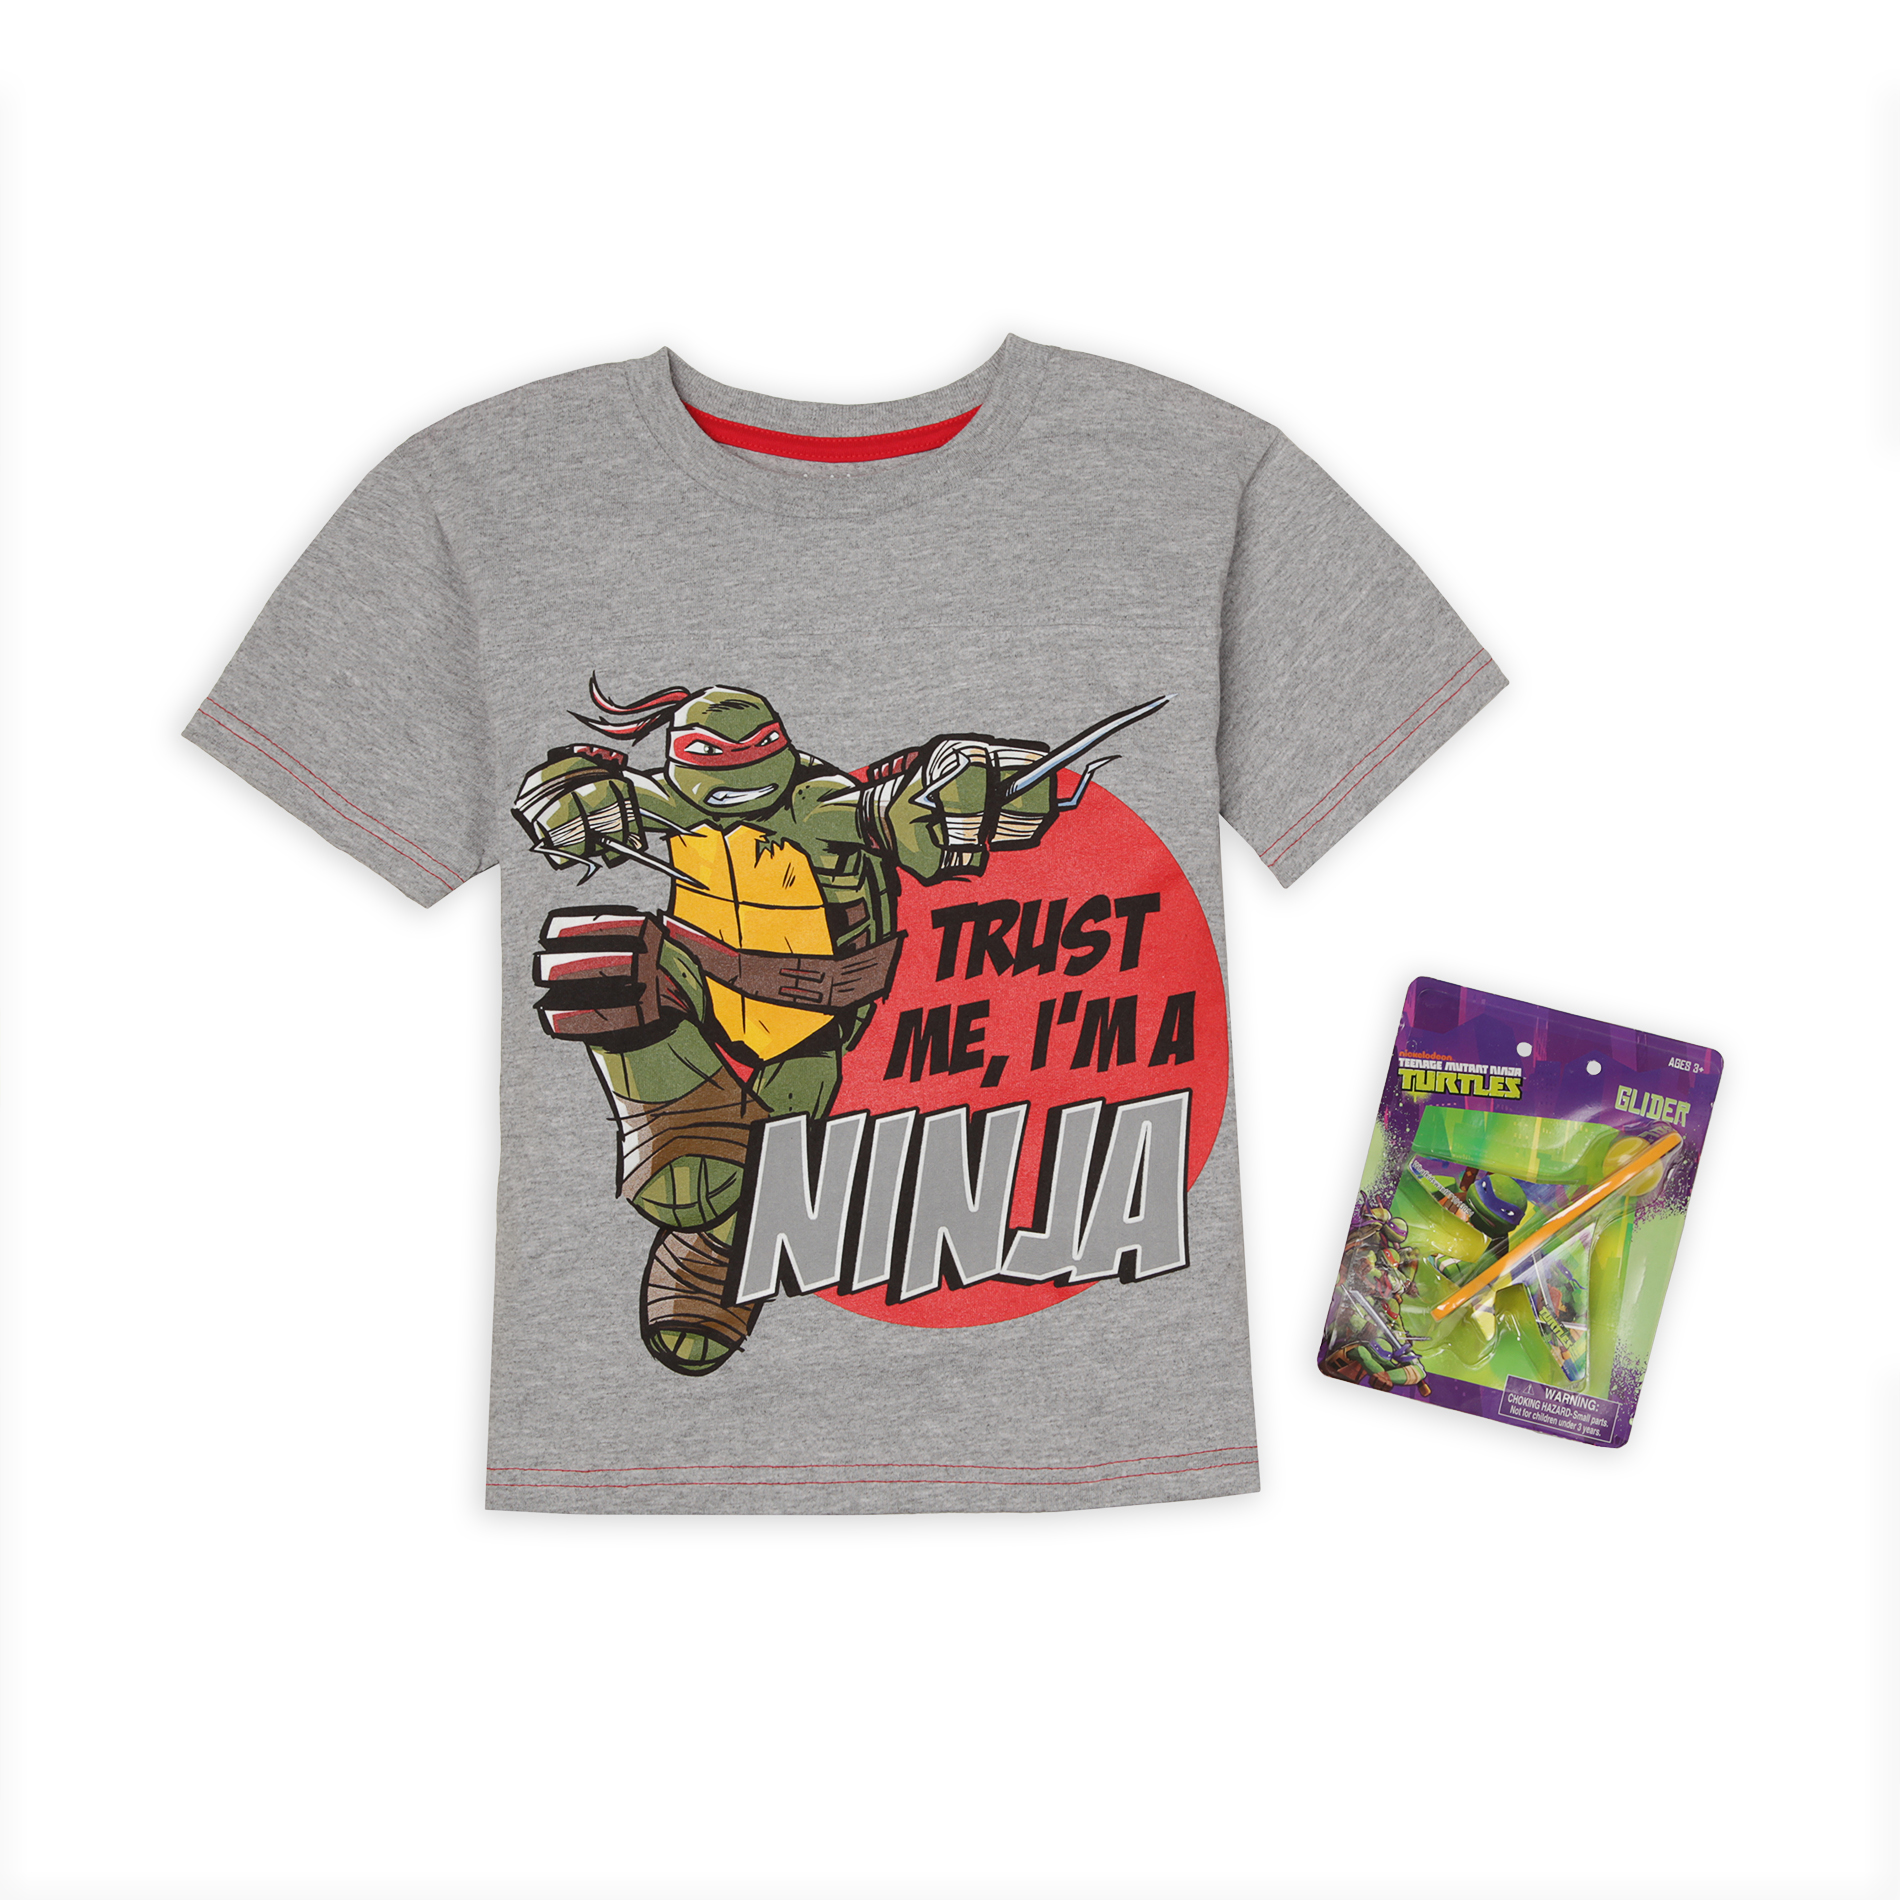 Nickelodeon Boy's Graphic T-Shirt & Gilder Toy